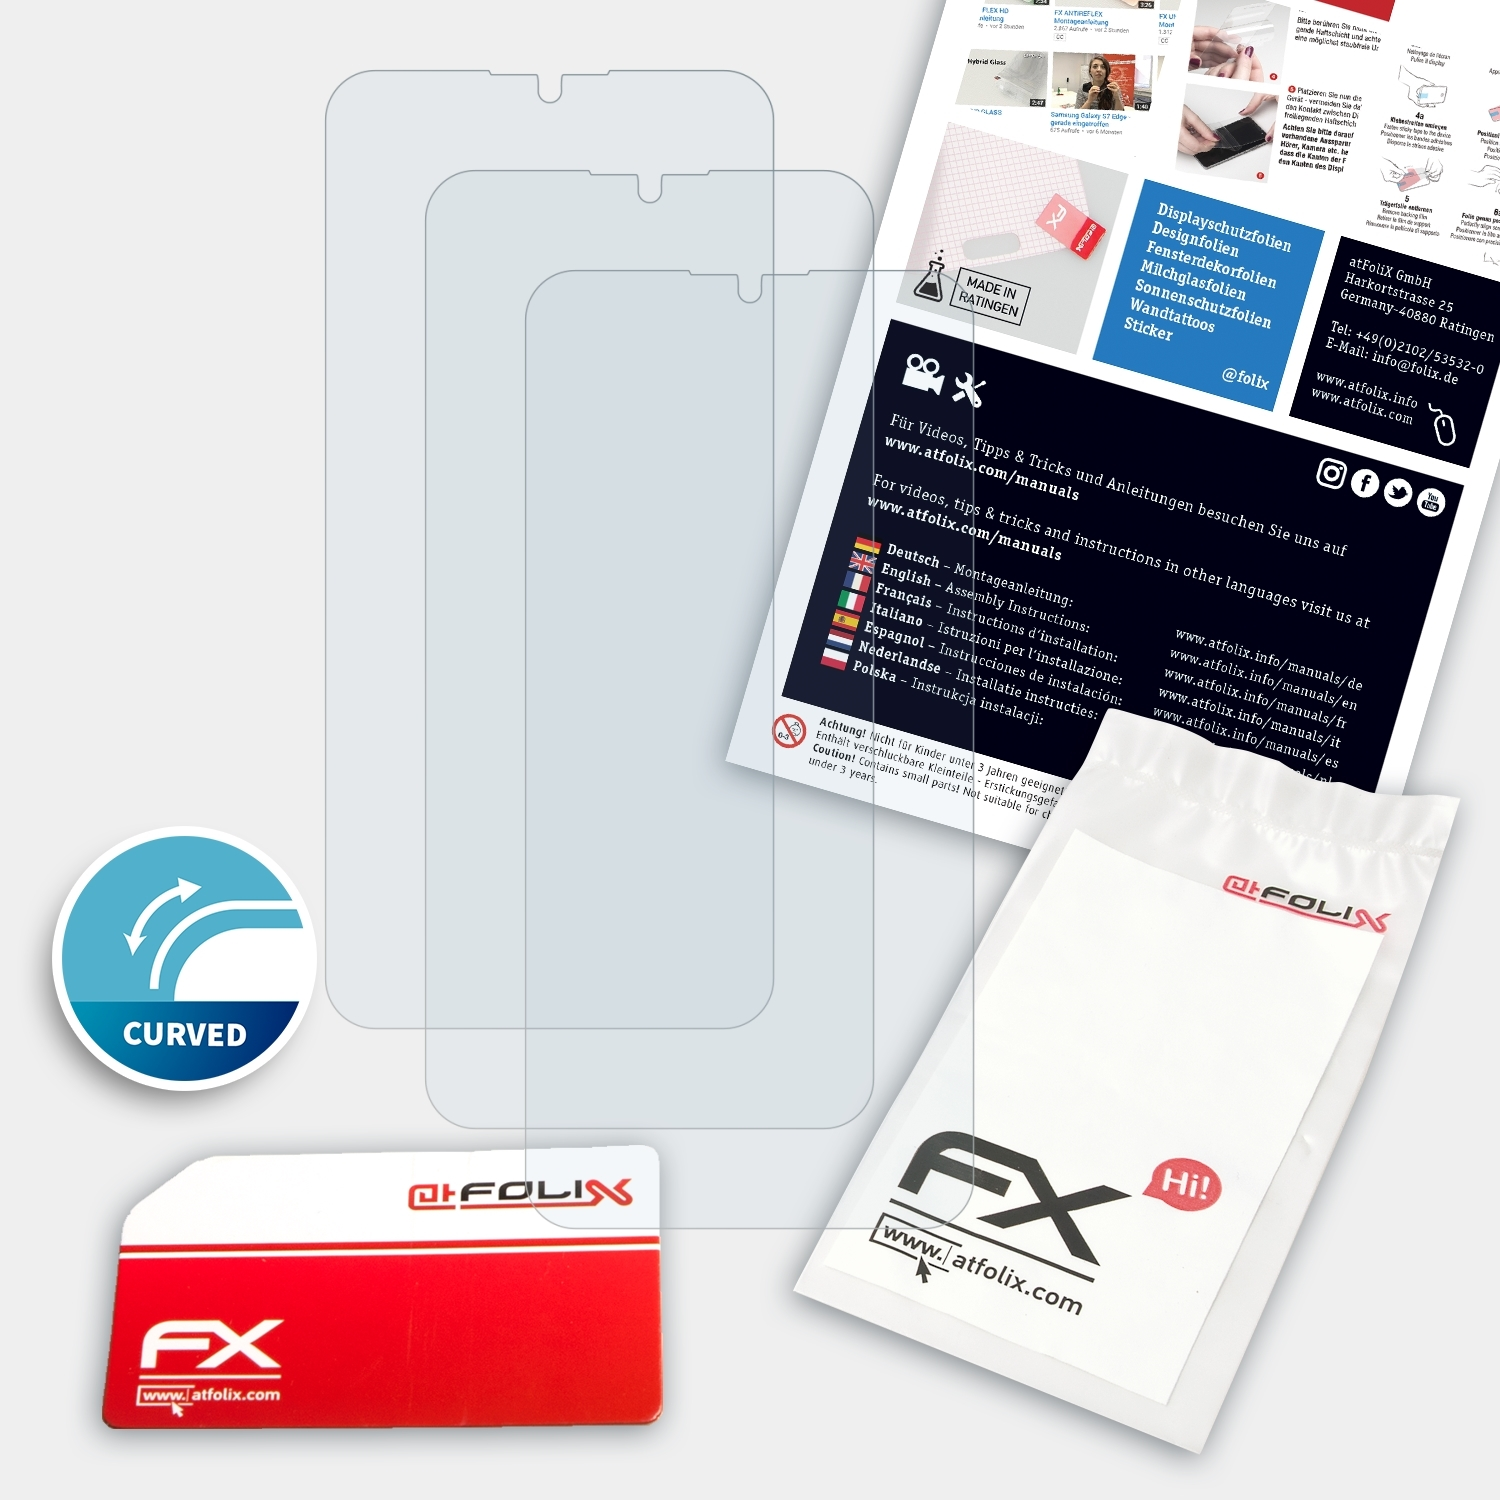 ATFOLIX 3x FX-ActiFleX Displayschutz(für Smartisan Pro Nut 3)